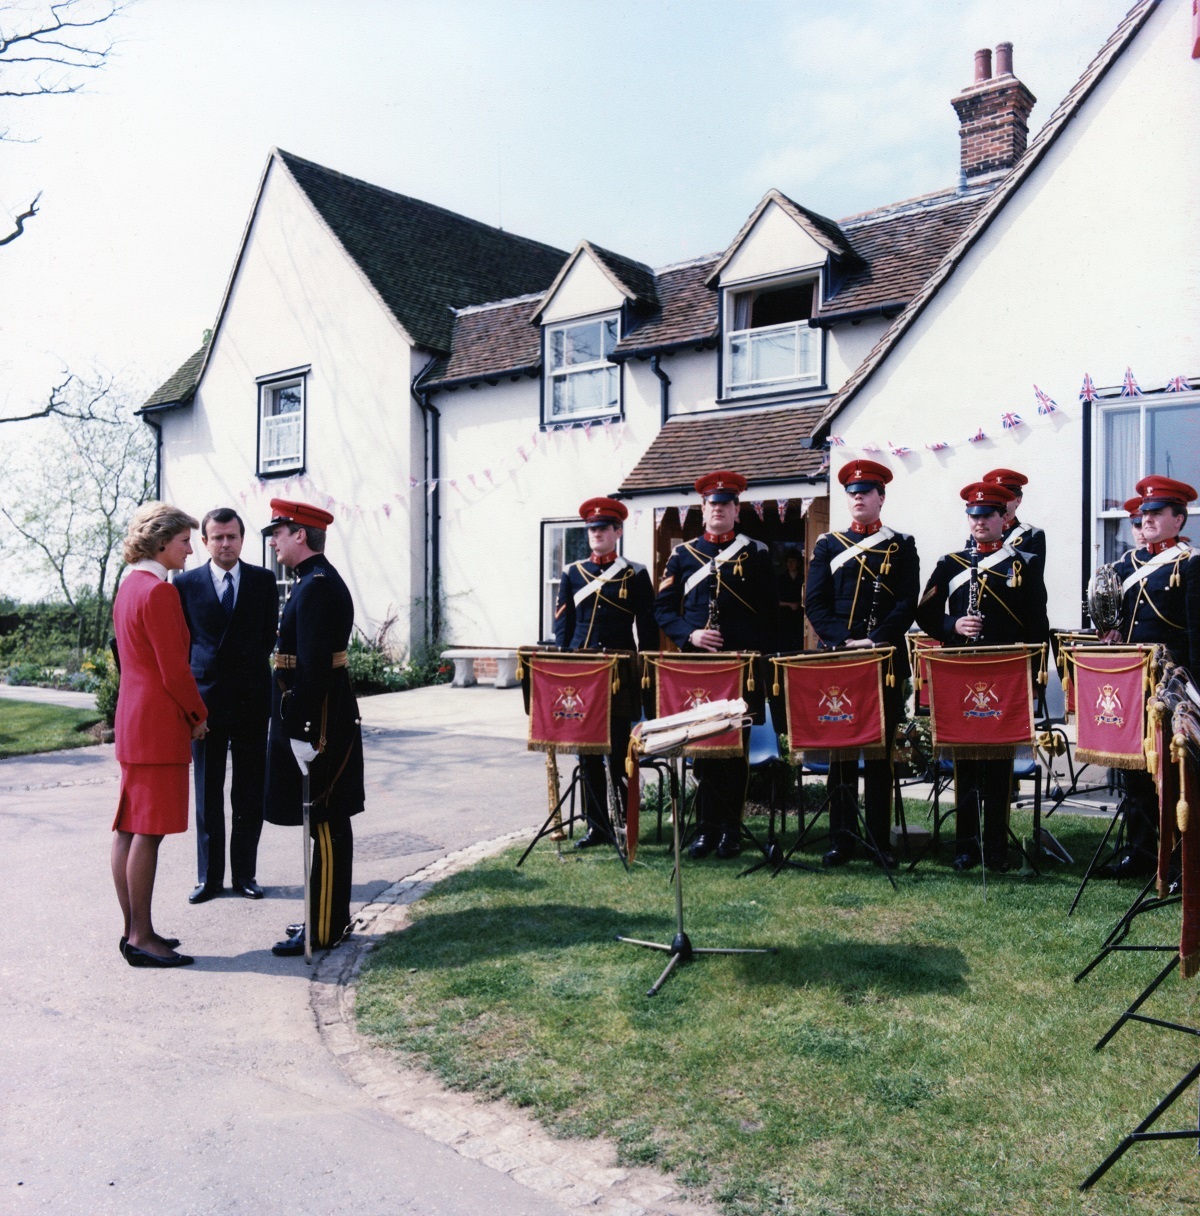 Striking the right note - Princess Diana meets the bandmaster